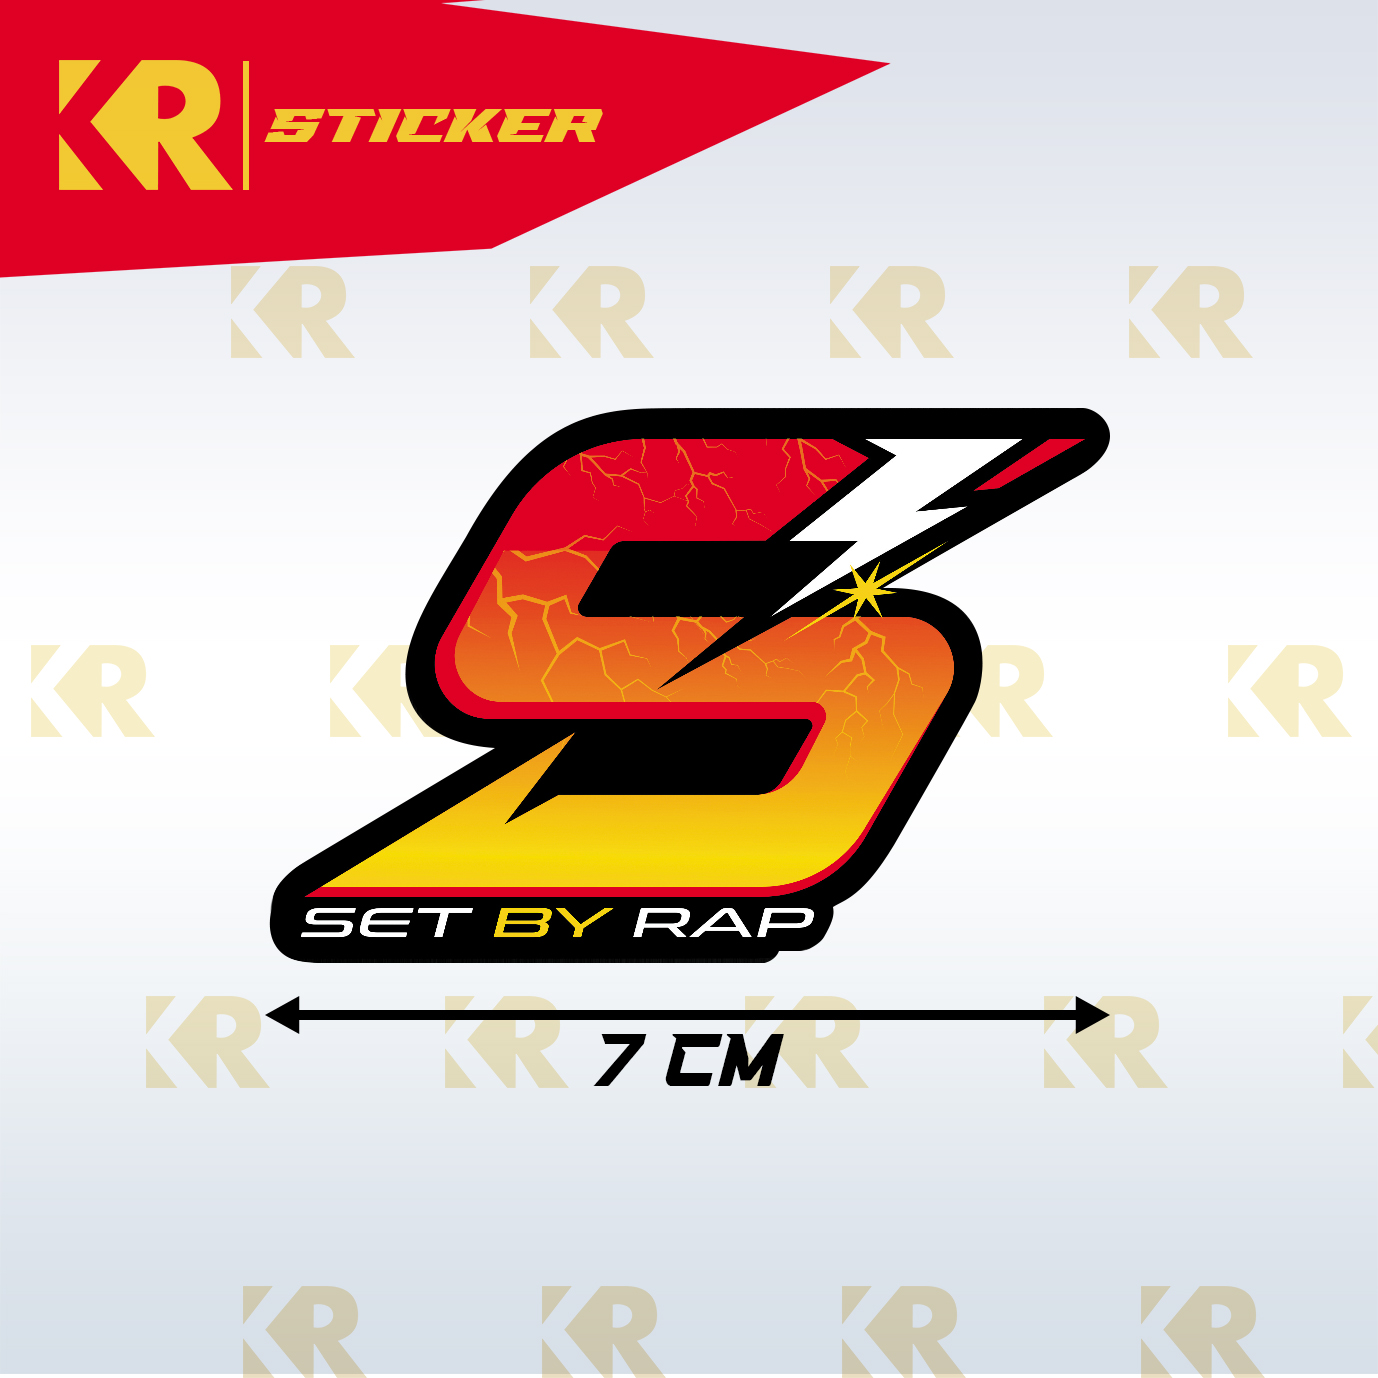 Stiker SET BY RAP Original Sticker Racing, KR STICKER